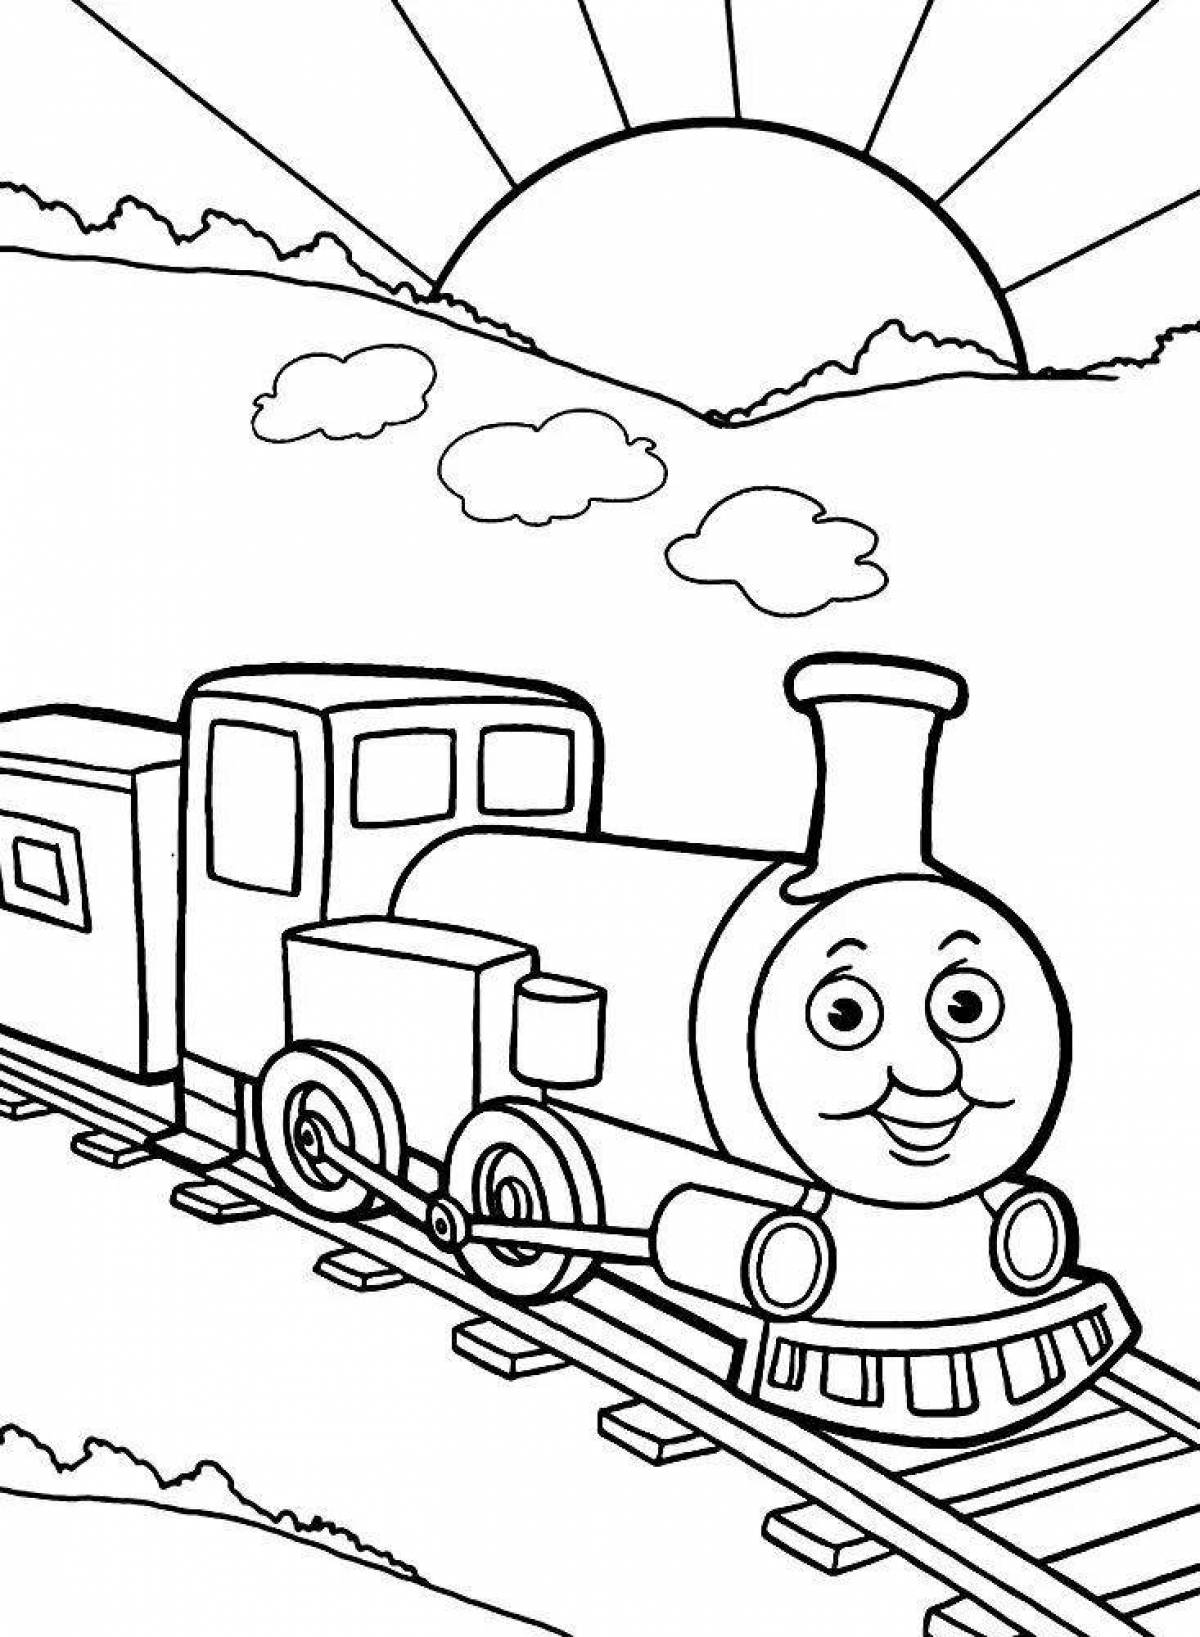 Steam locomotive for kids #15